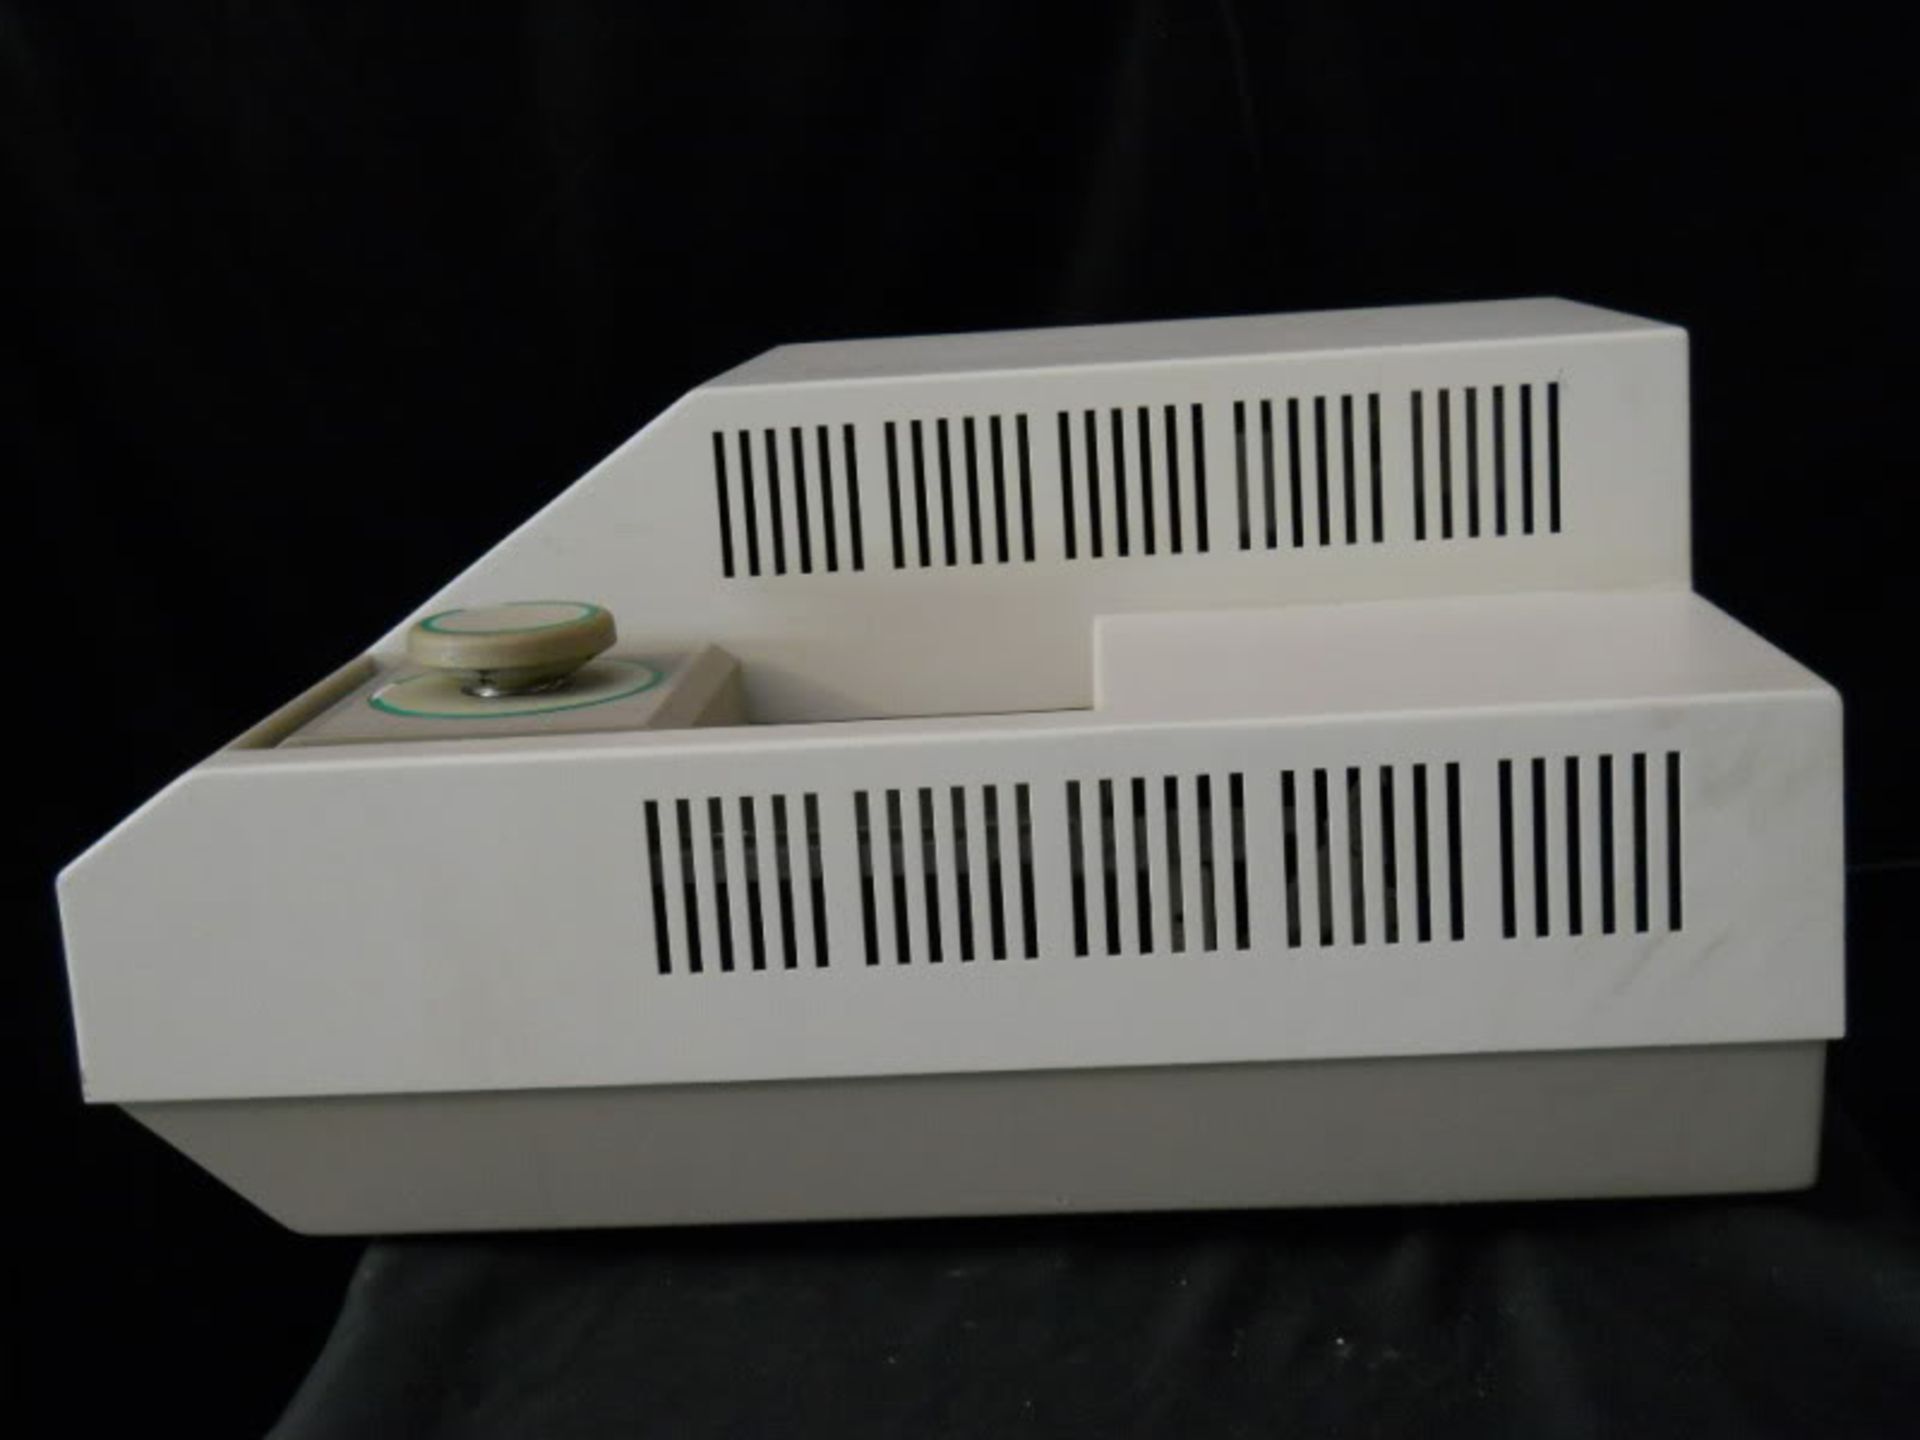 Perkin Elmer GeneAmp PCR System 9600 (D), Qty 1, 221038179154 - Image 12 of 12